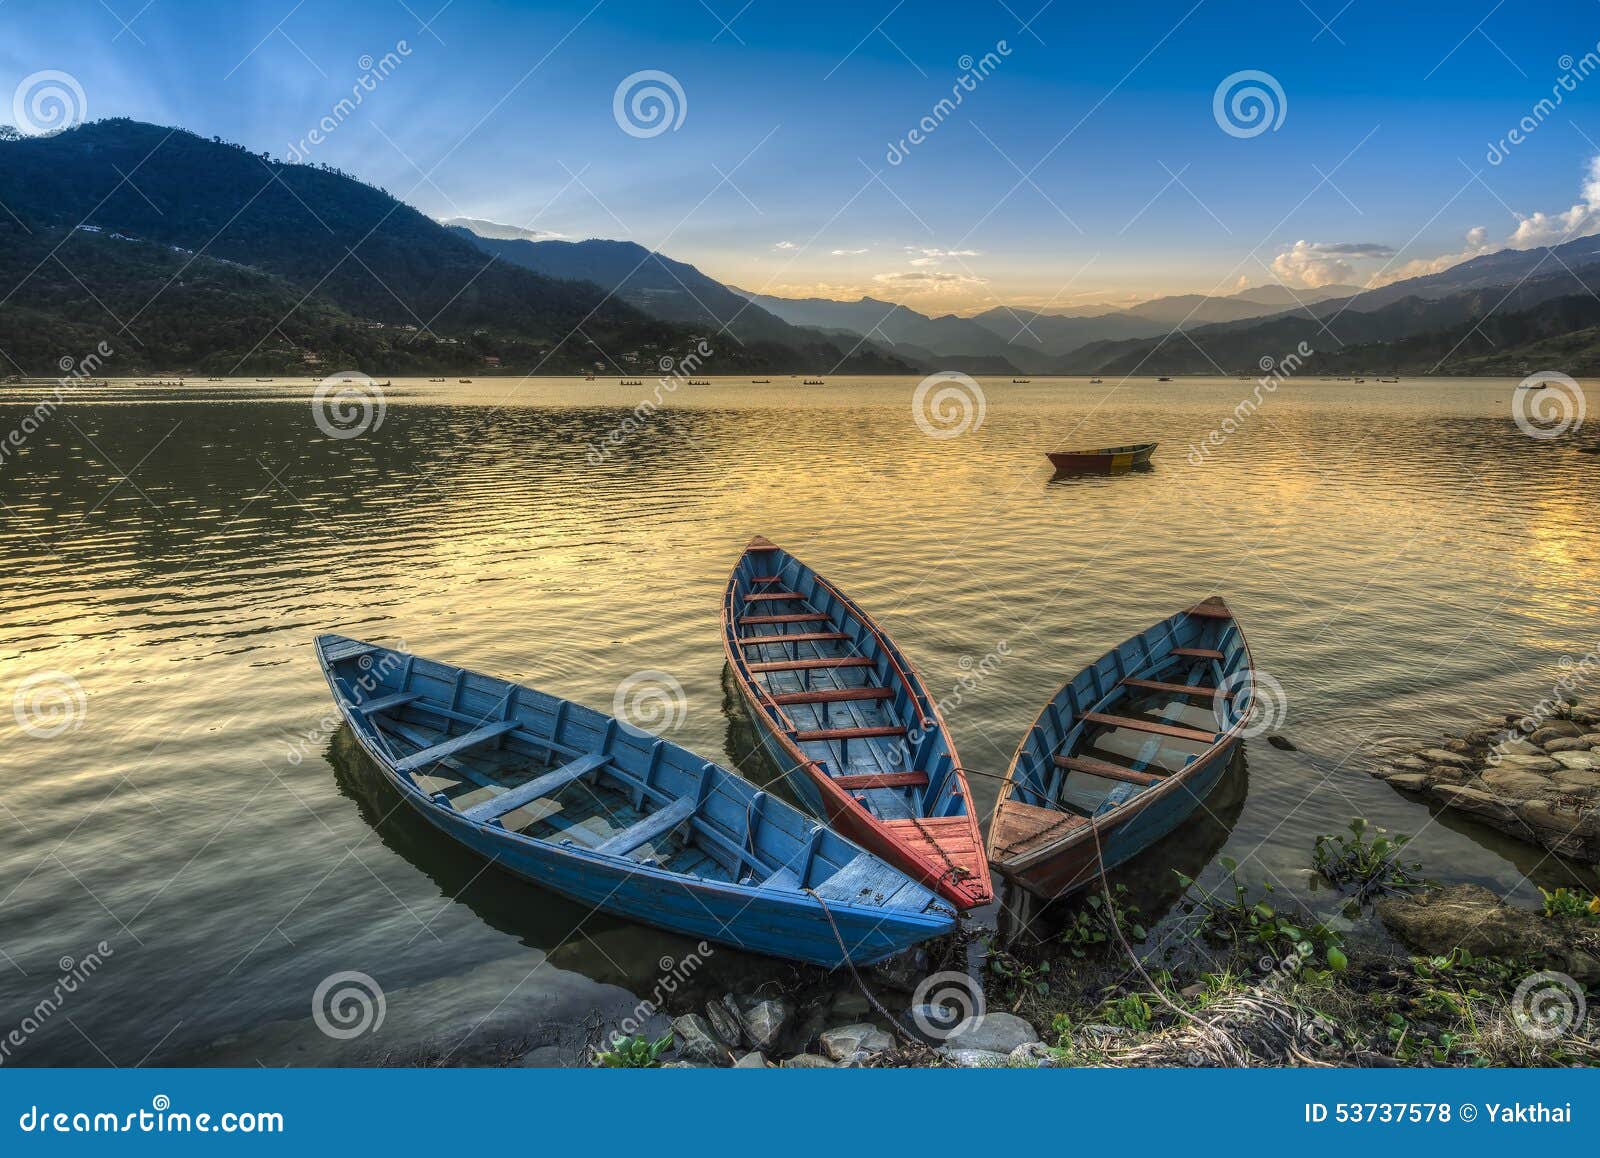 boats on fewa lake in pokhara, nepal